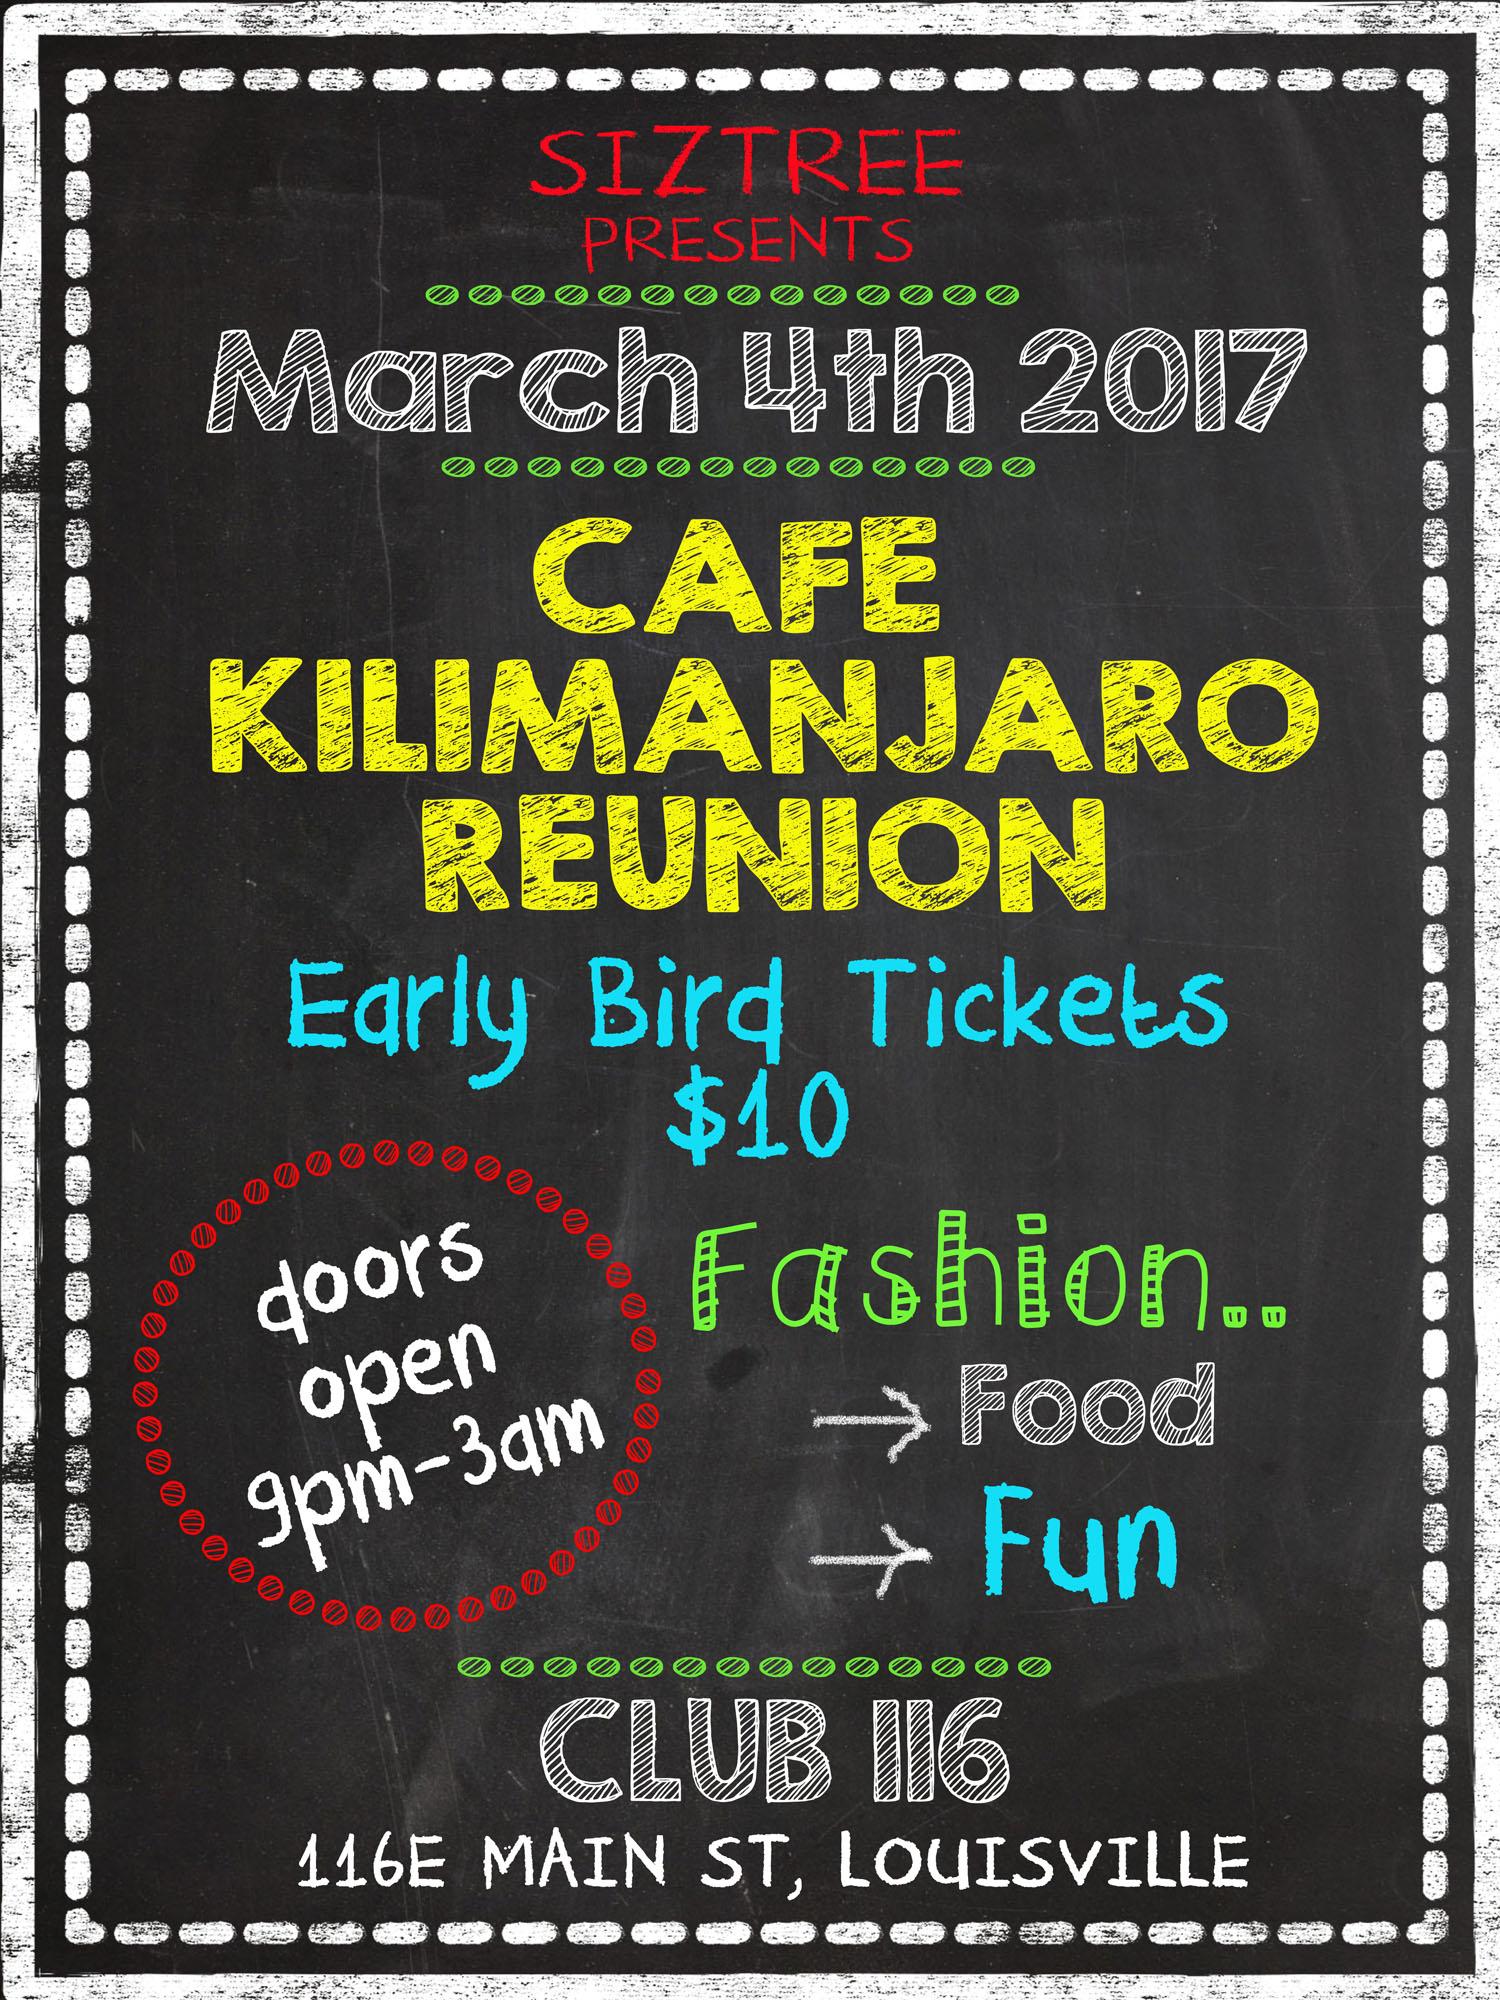 CAFE KILIMANJARO REUNION 2017 *NEW DATE*